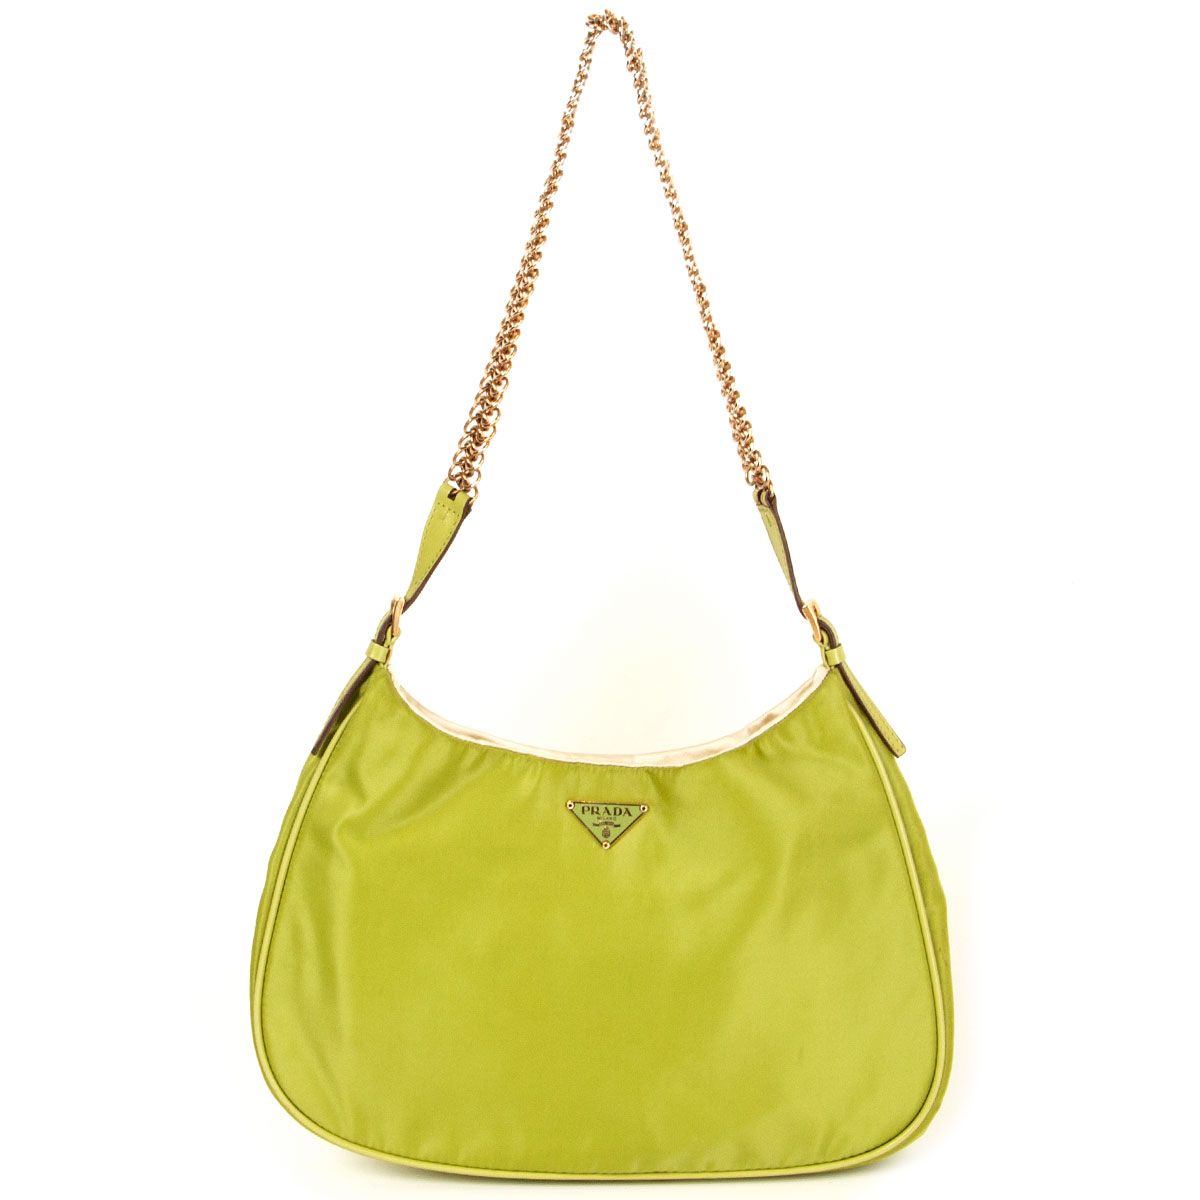 Top 32+ imagen lime green prada handbag